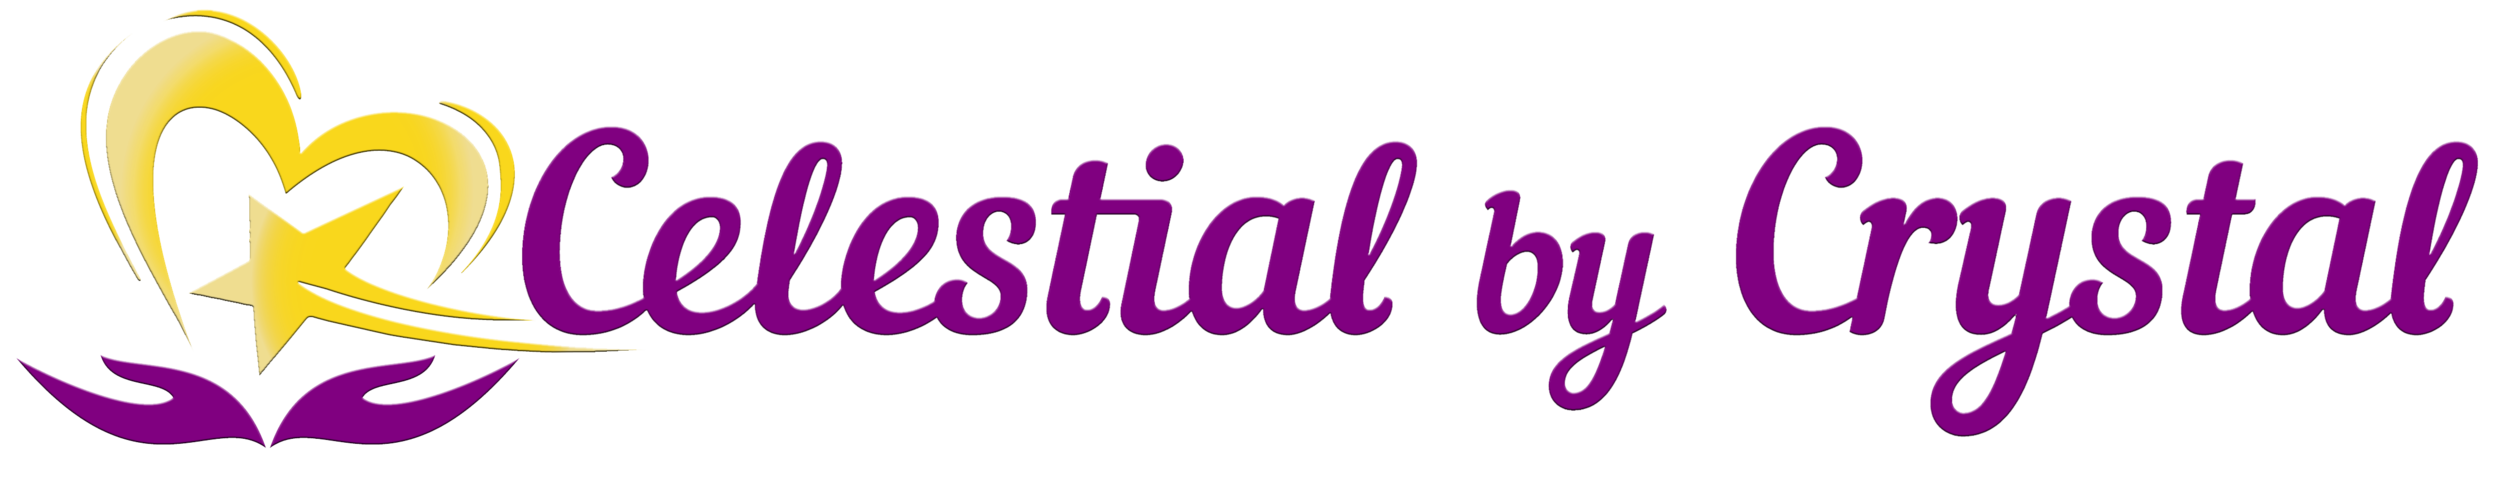 Celestial by Crystal